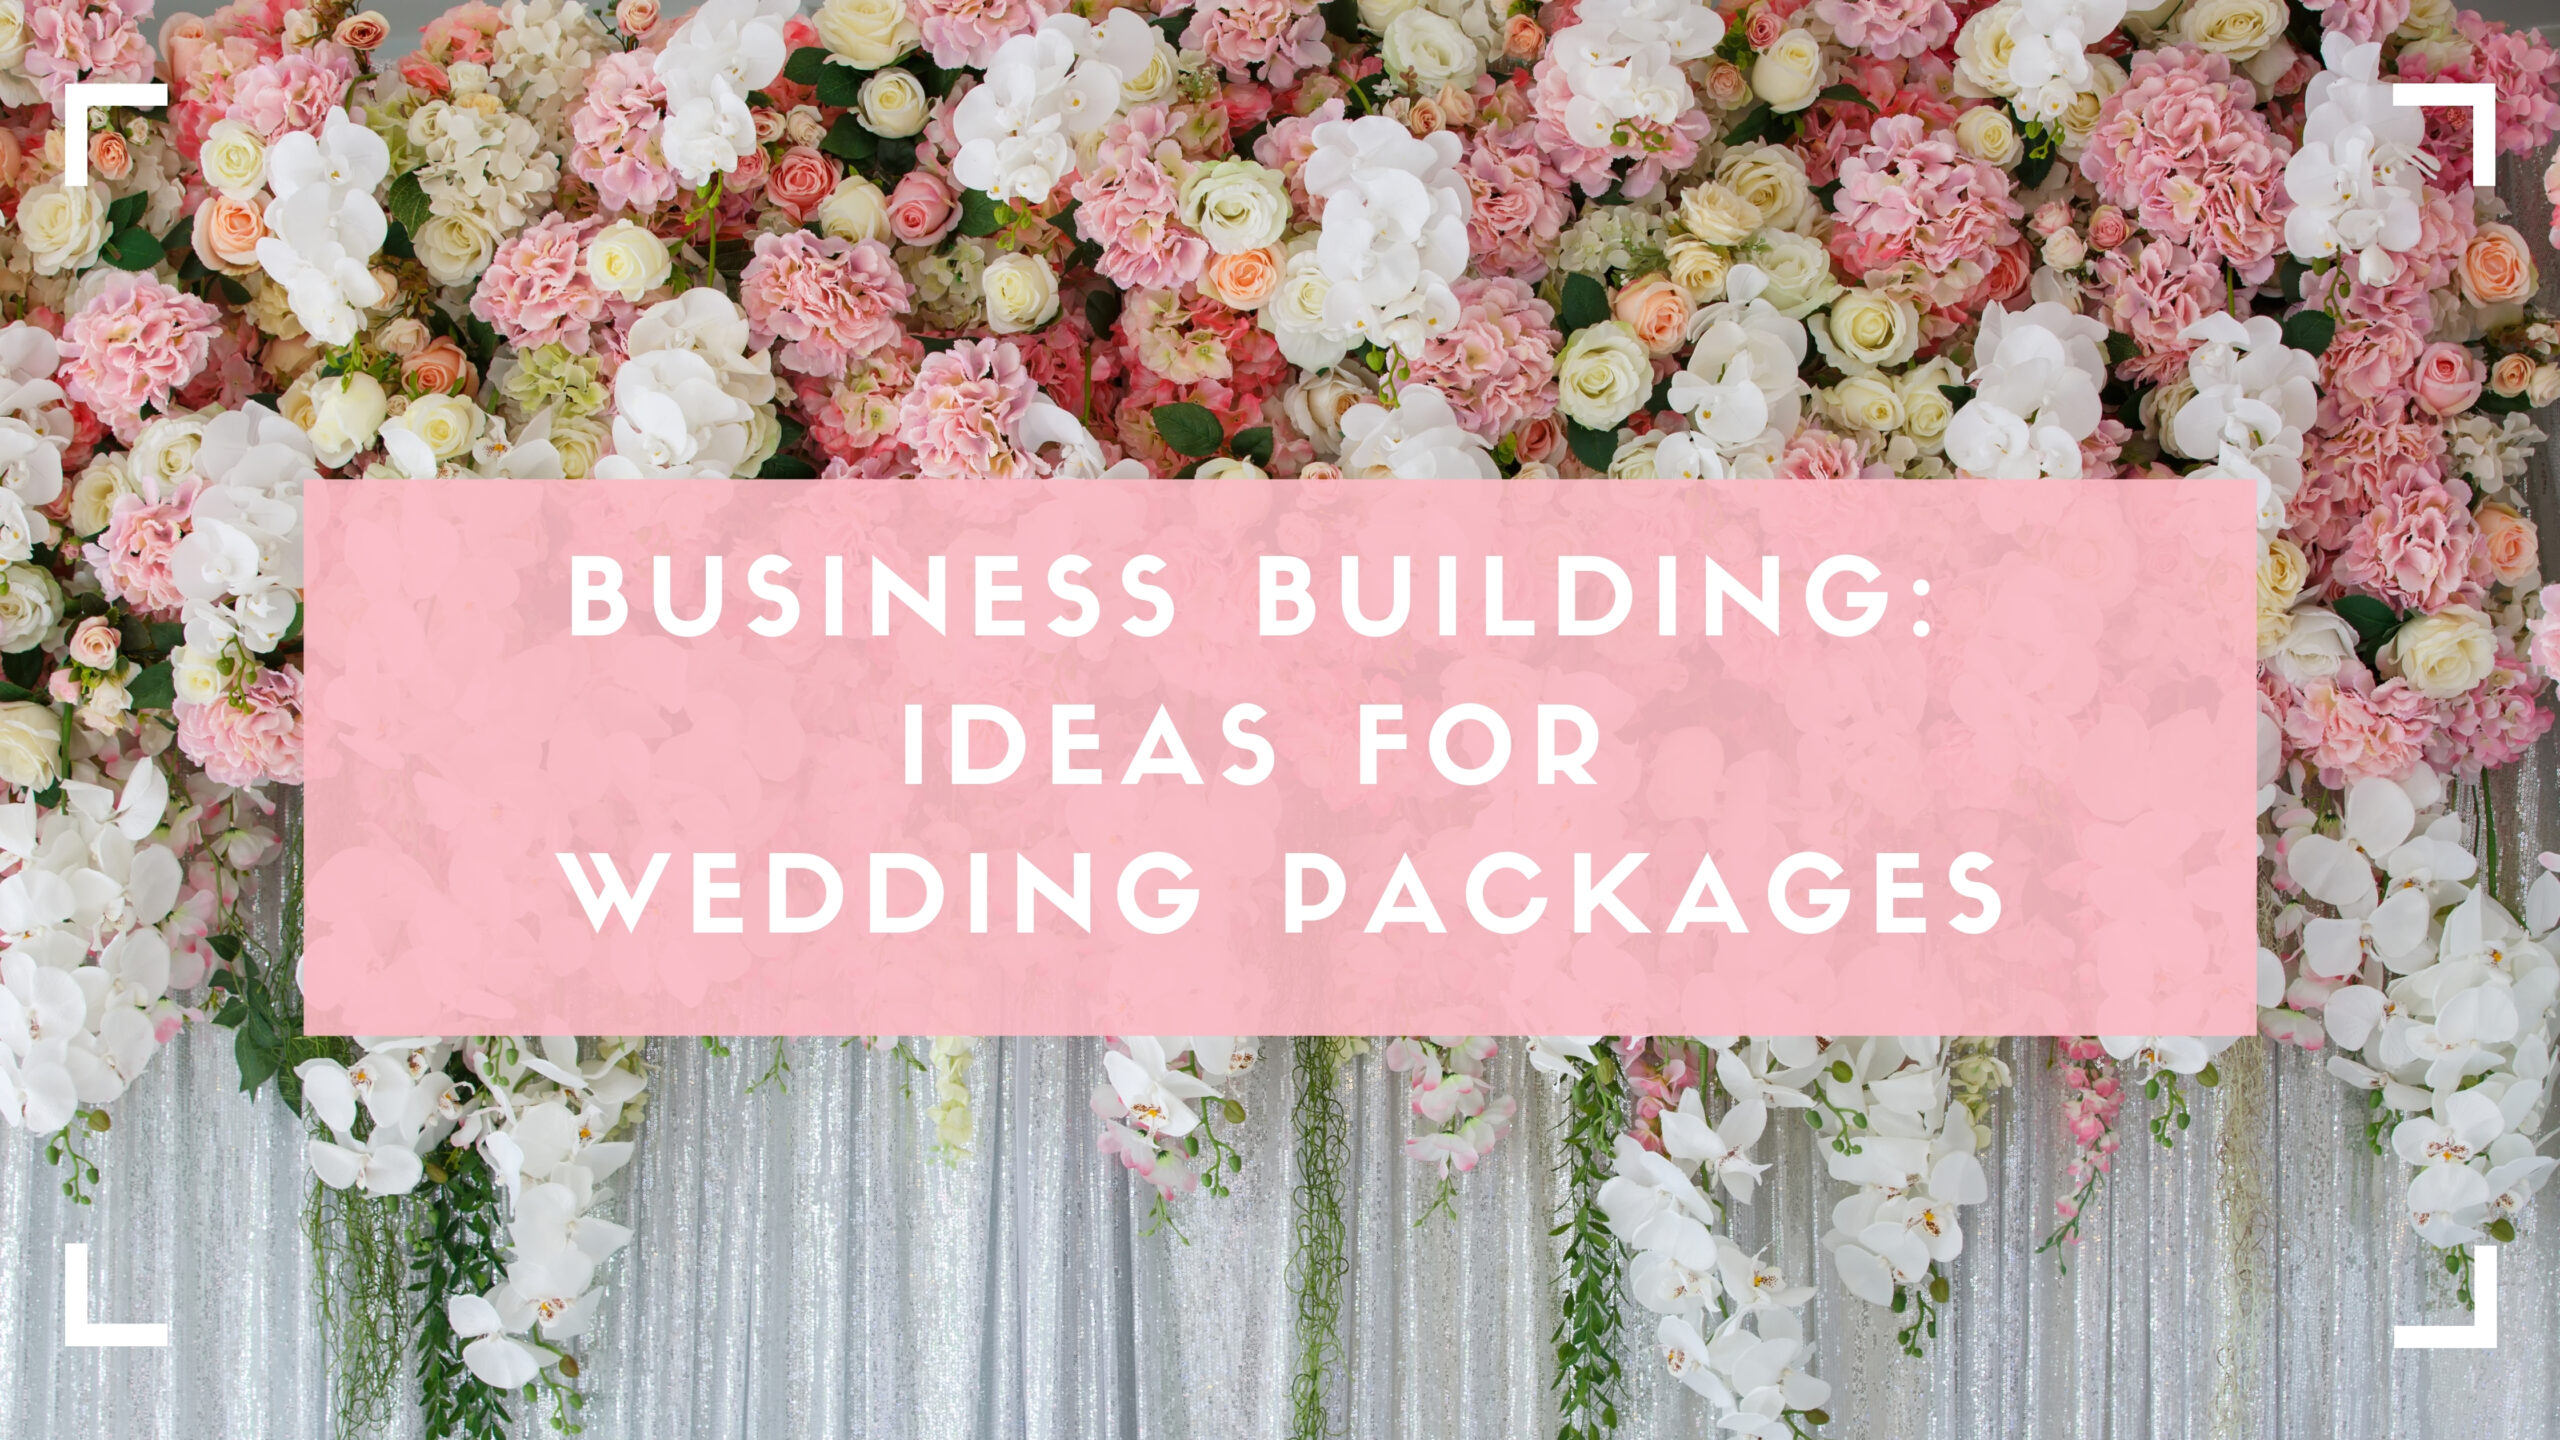 Wedding packages blog header image with floral background